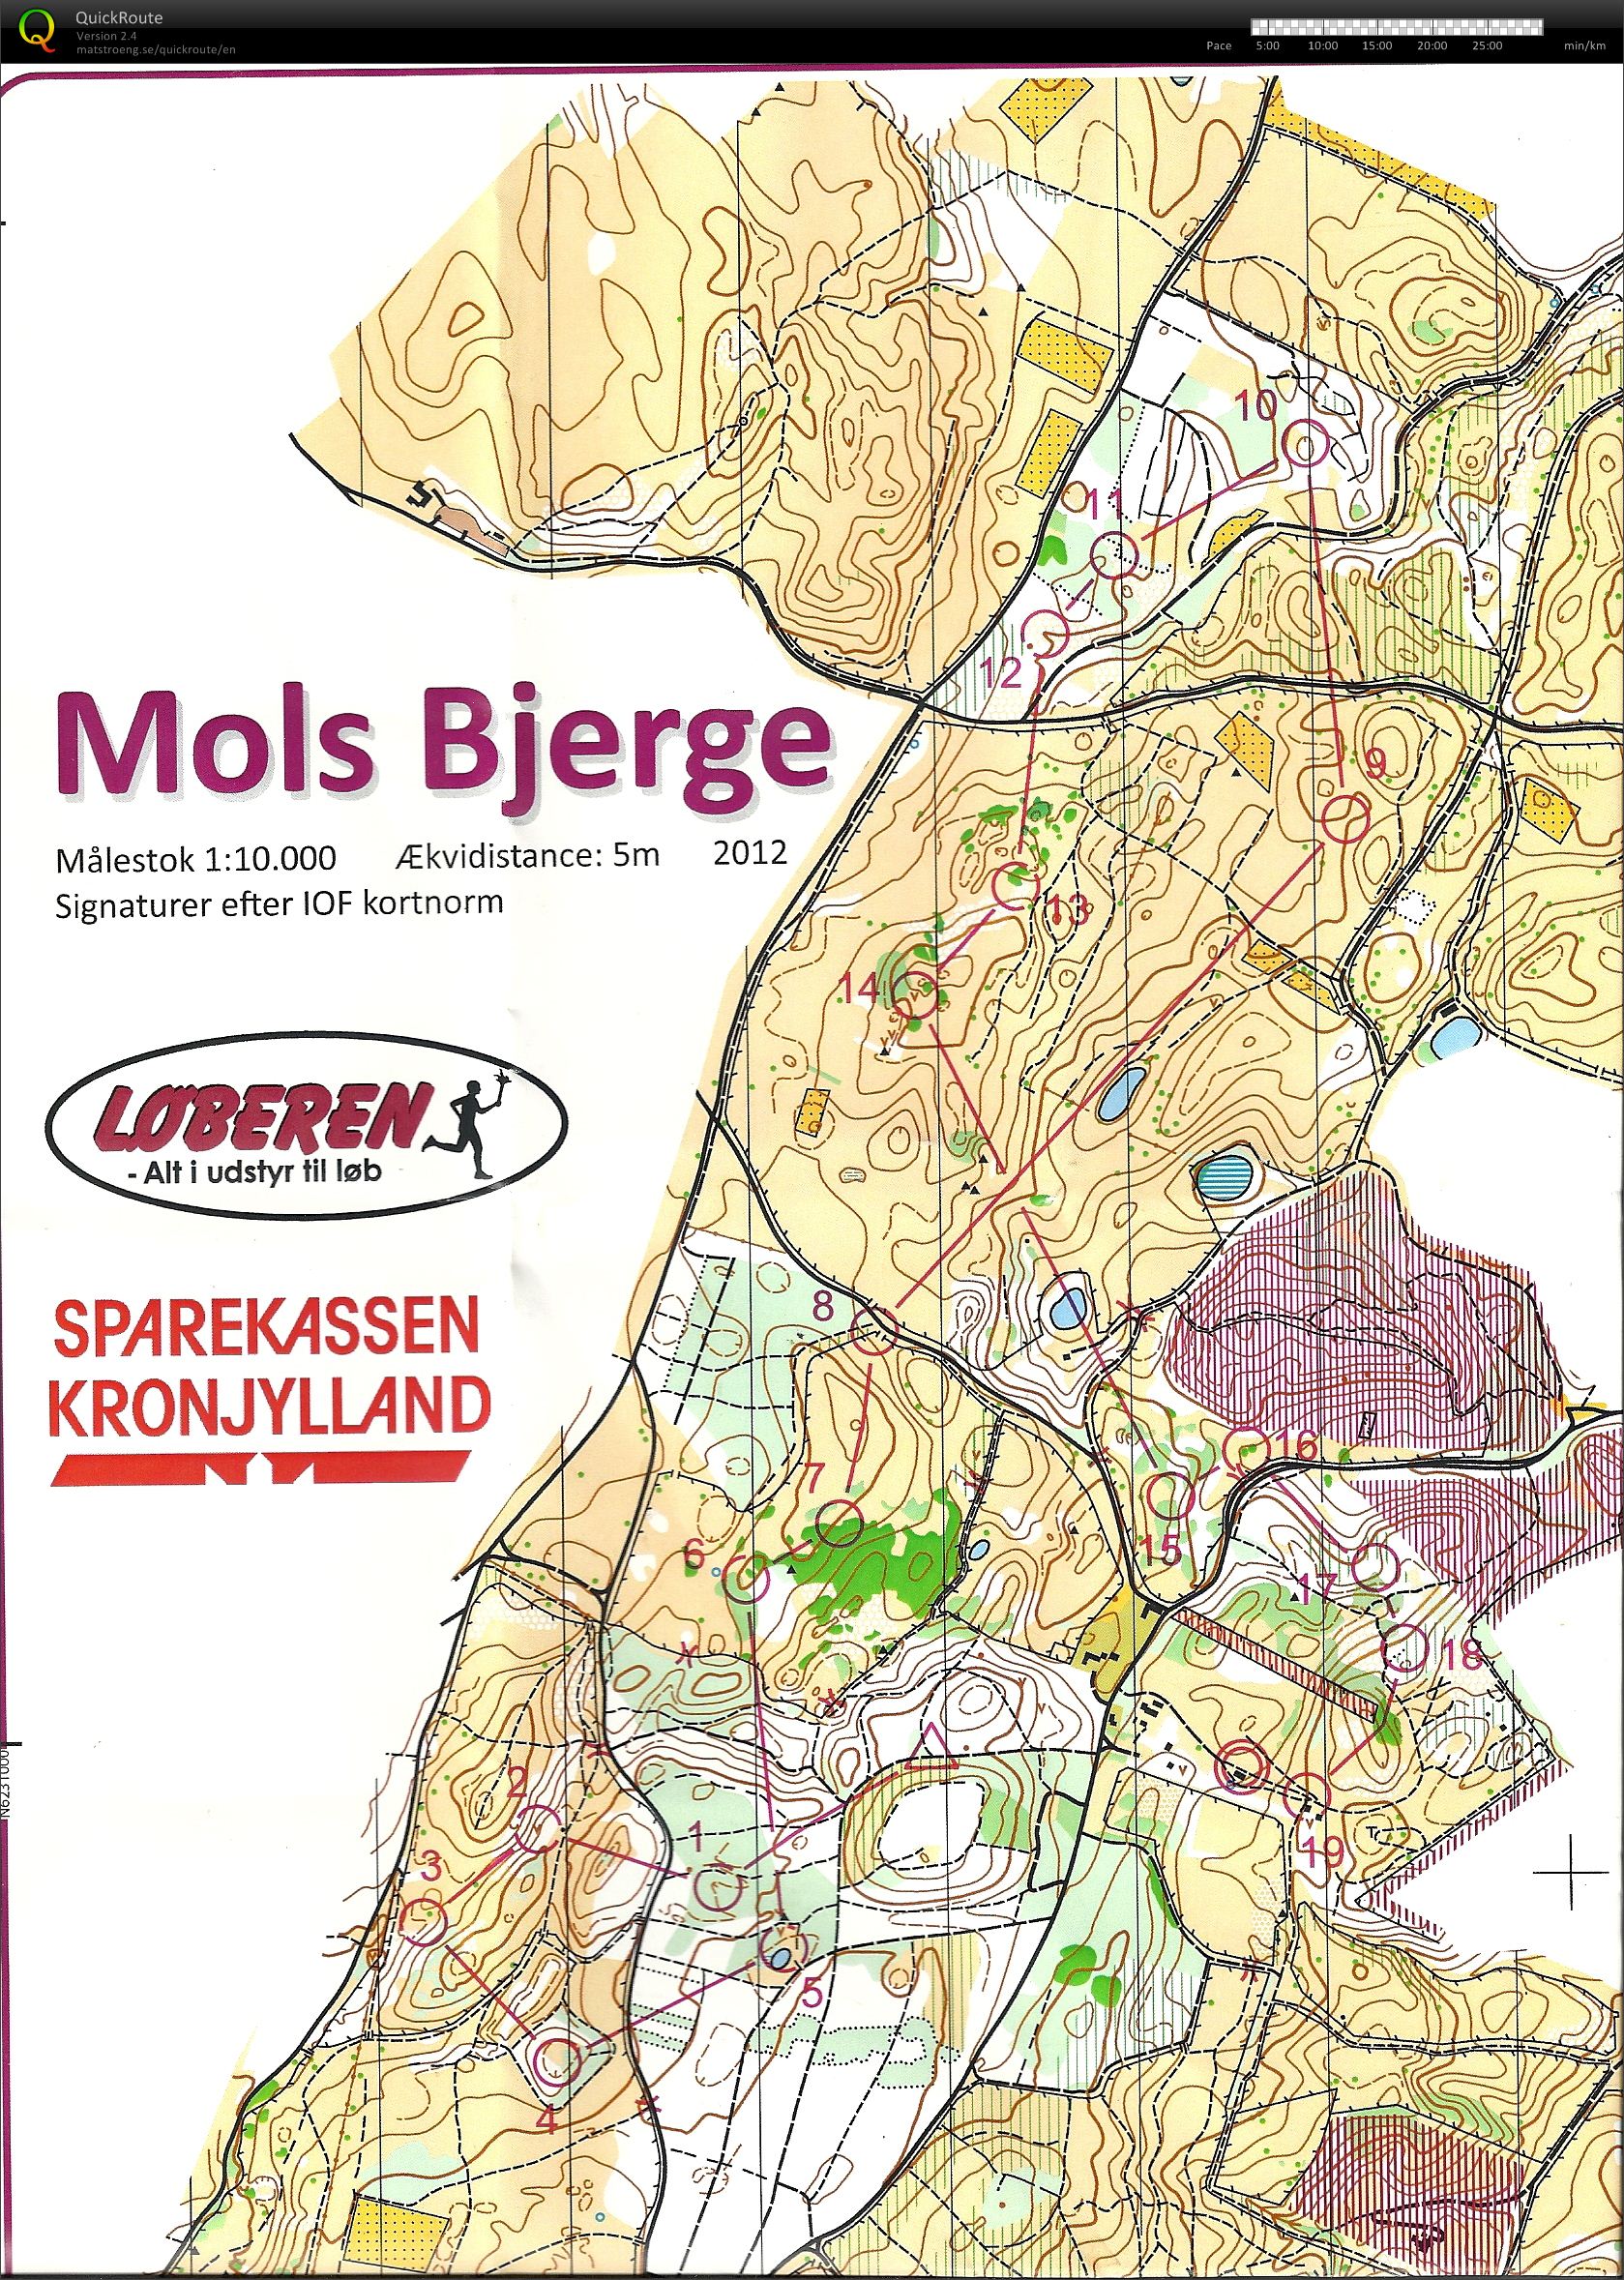 Mols Bjerge, JFM Lang, D45, LeneSN (19-08-2012)